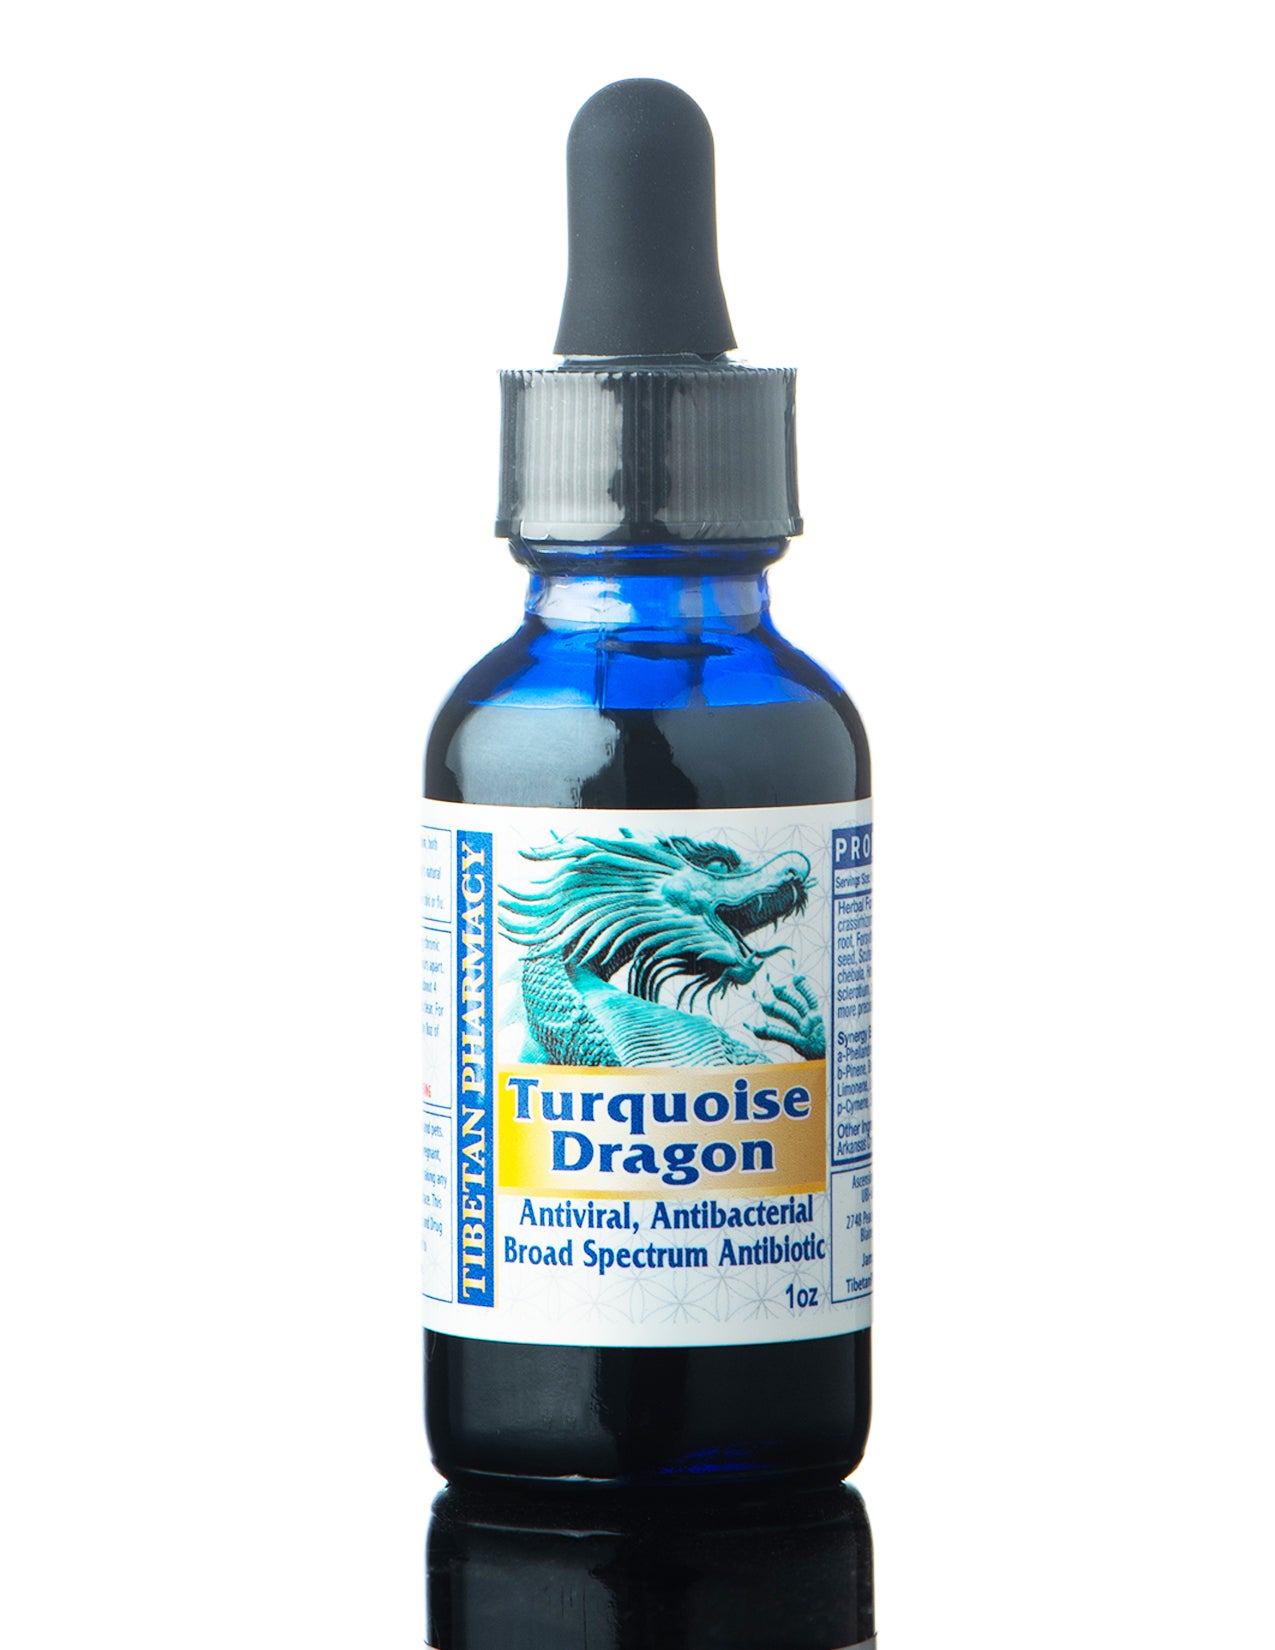 Turquoise Dragon | All-Natural Broad Spectrum Antibiotic and Antiviral